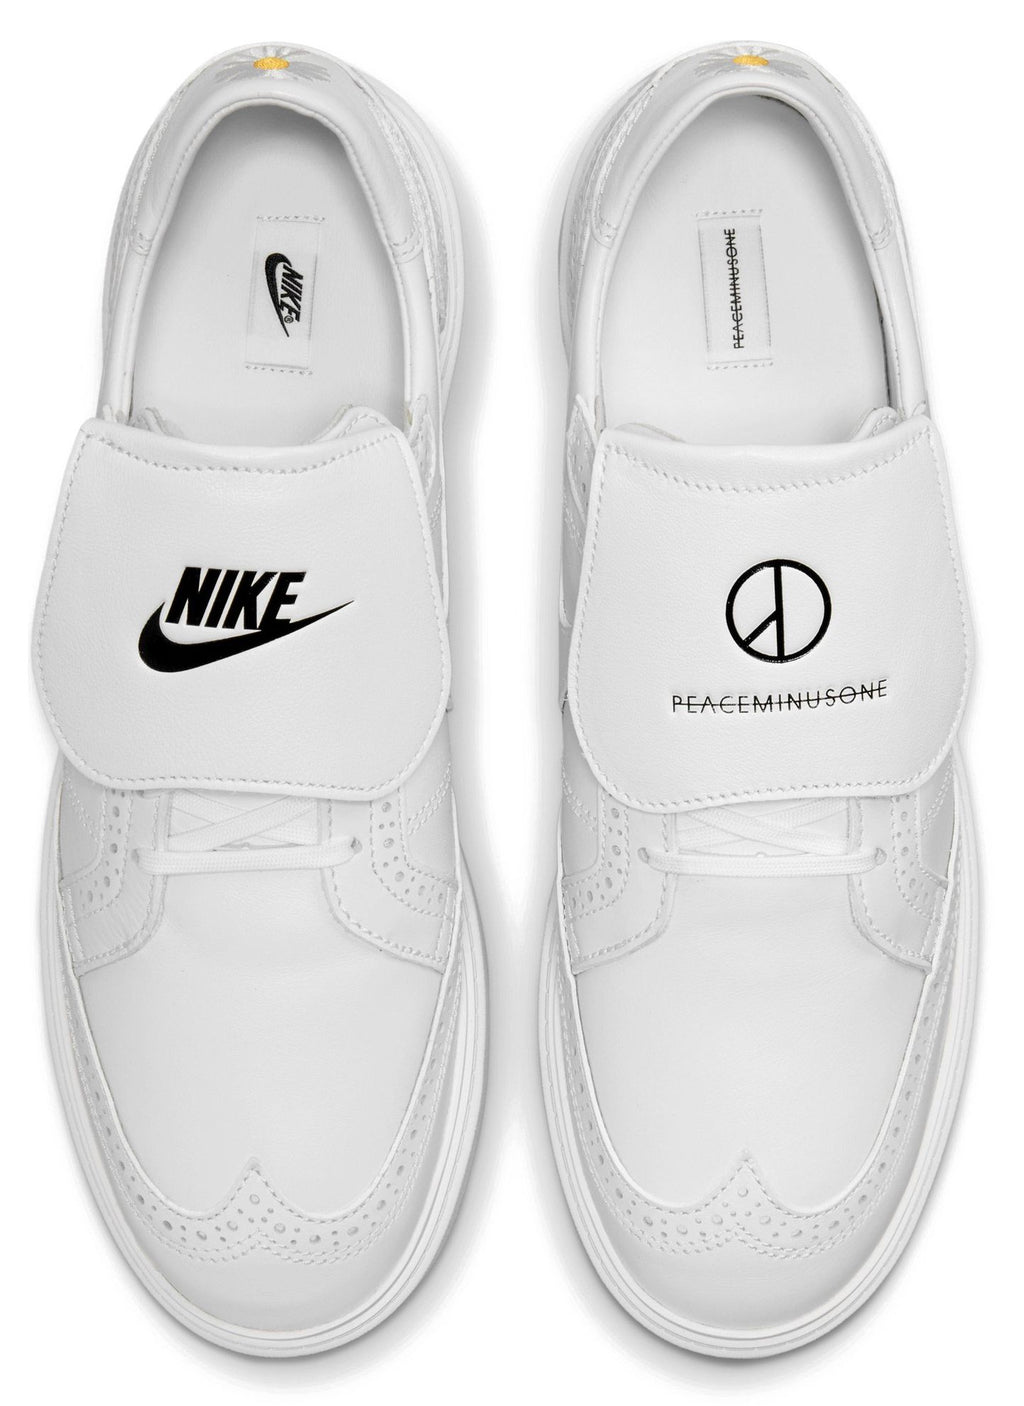  Nike Kwondo 1 G-dragon Peaceminusone Triple White Bianco Uomo - 4